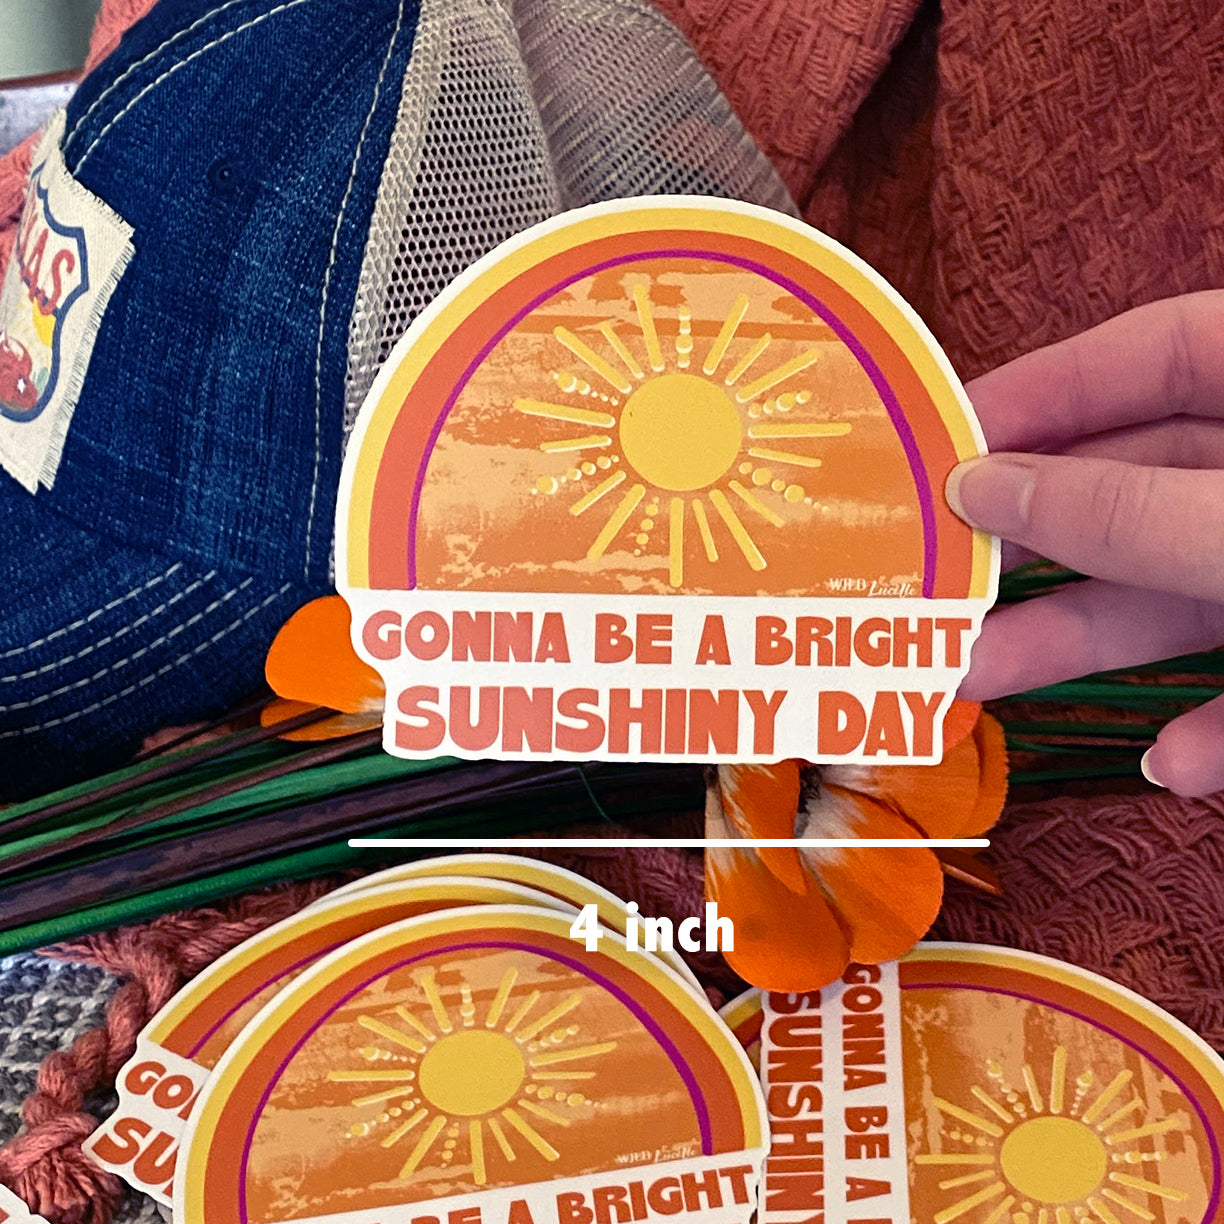 Bright Sunshiny Day - Jumbo Inspirational Vinyl Decal